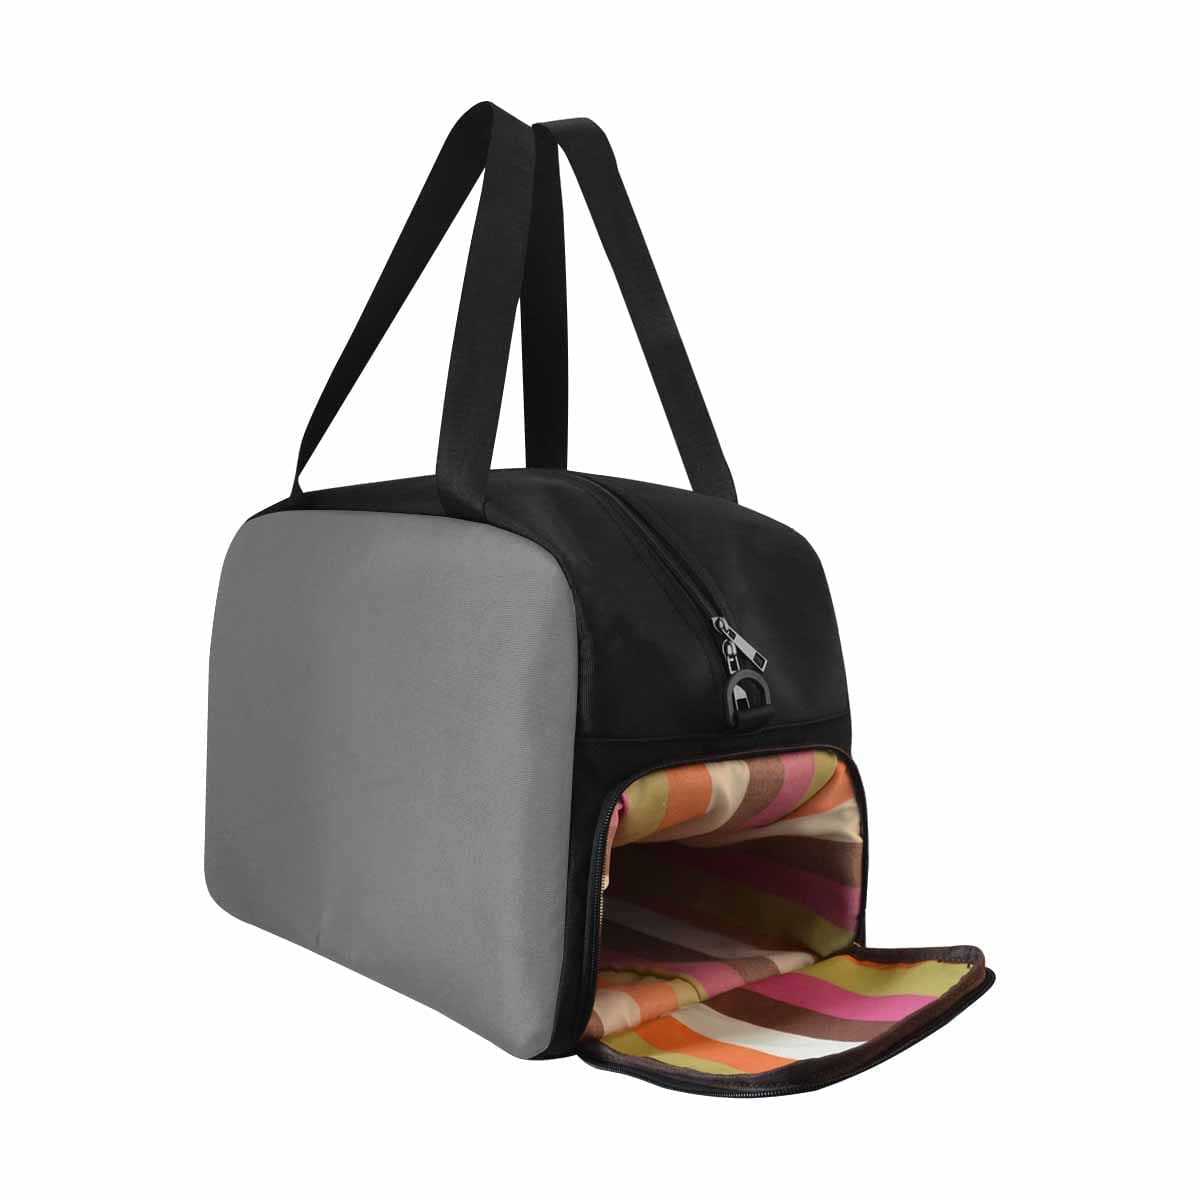 Gray Tote And Crossbody Travel Bag - Bags | Travel Bags | Crossbody